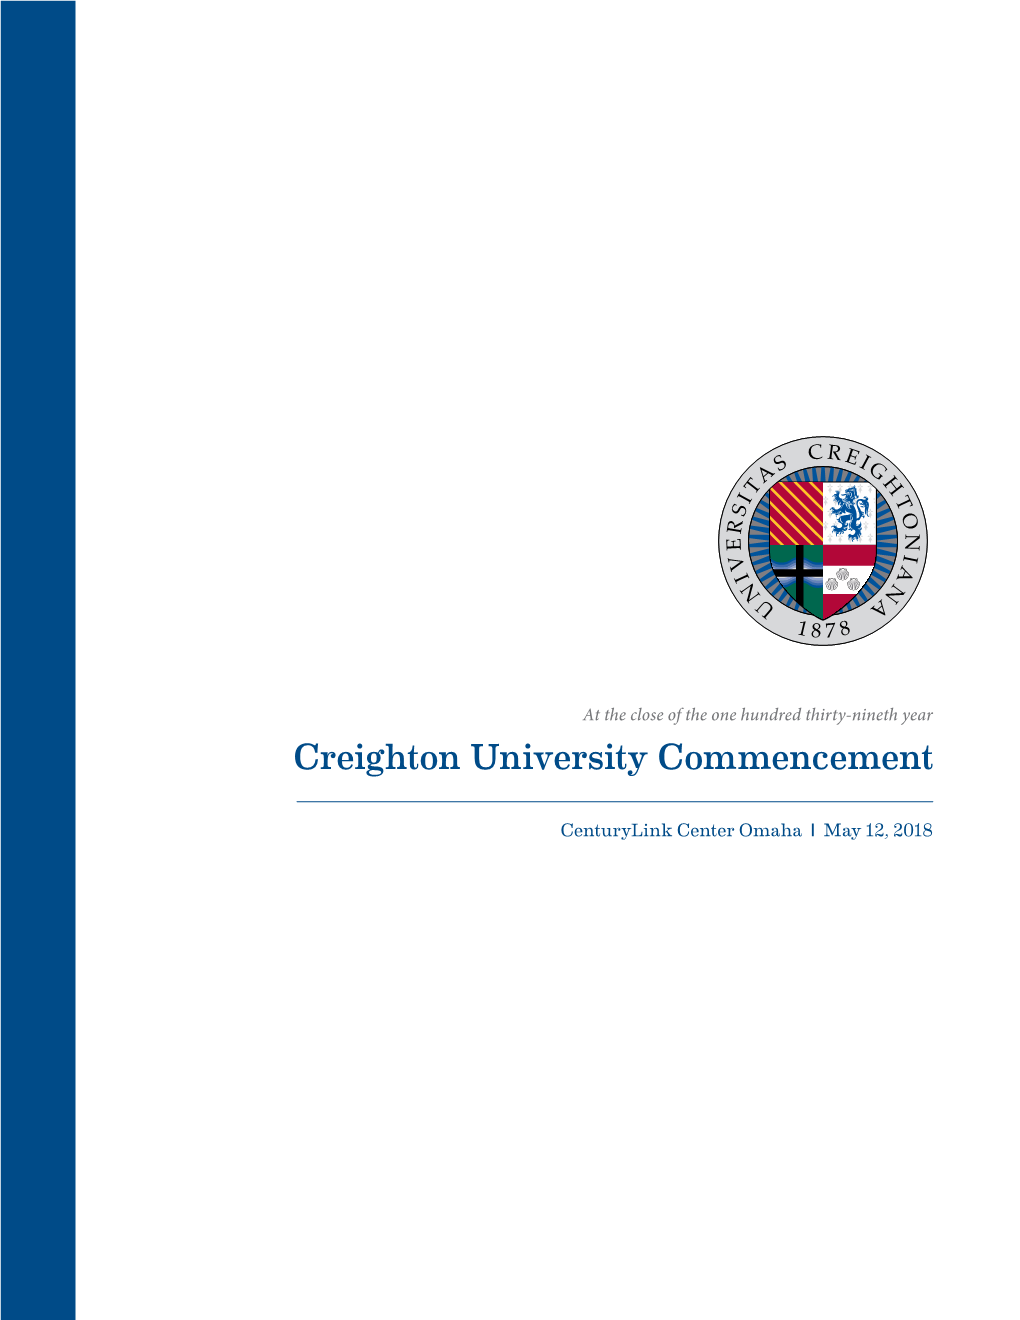 Creighton University Commencement